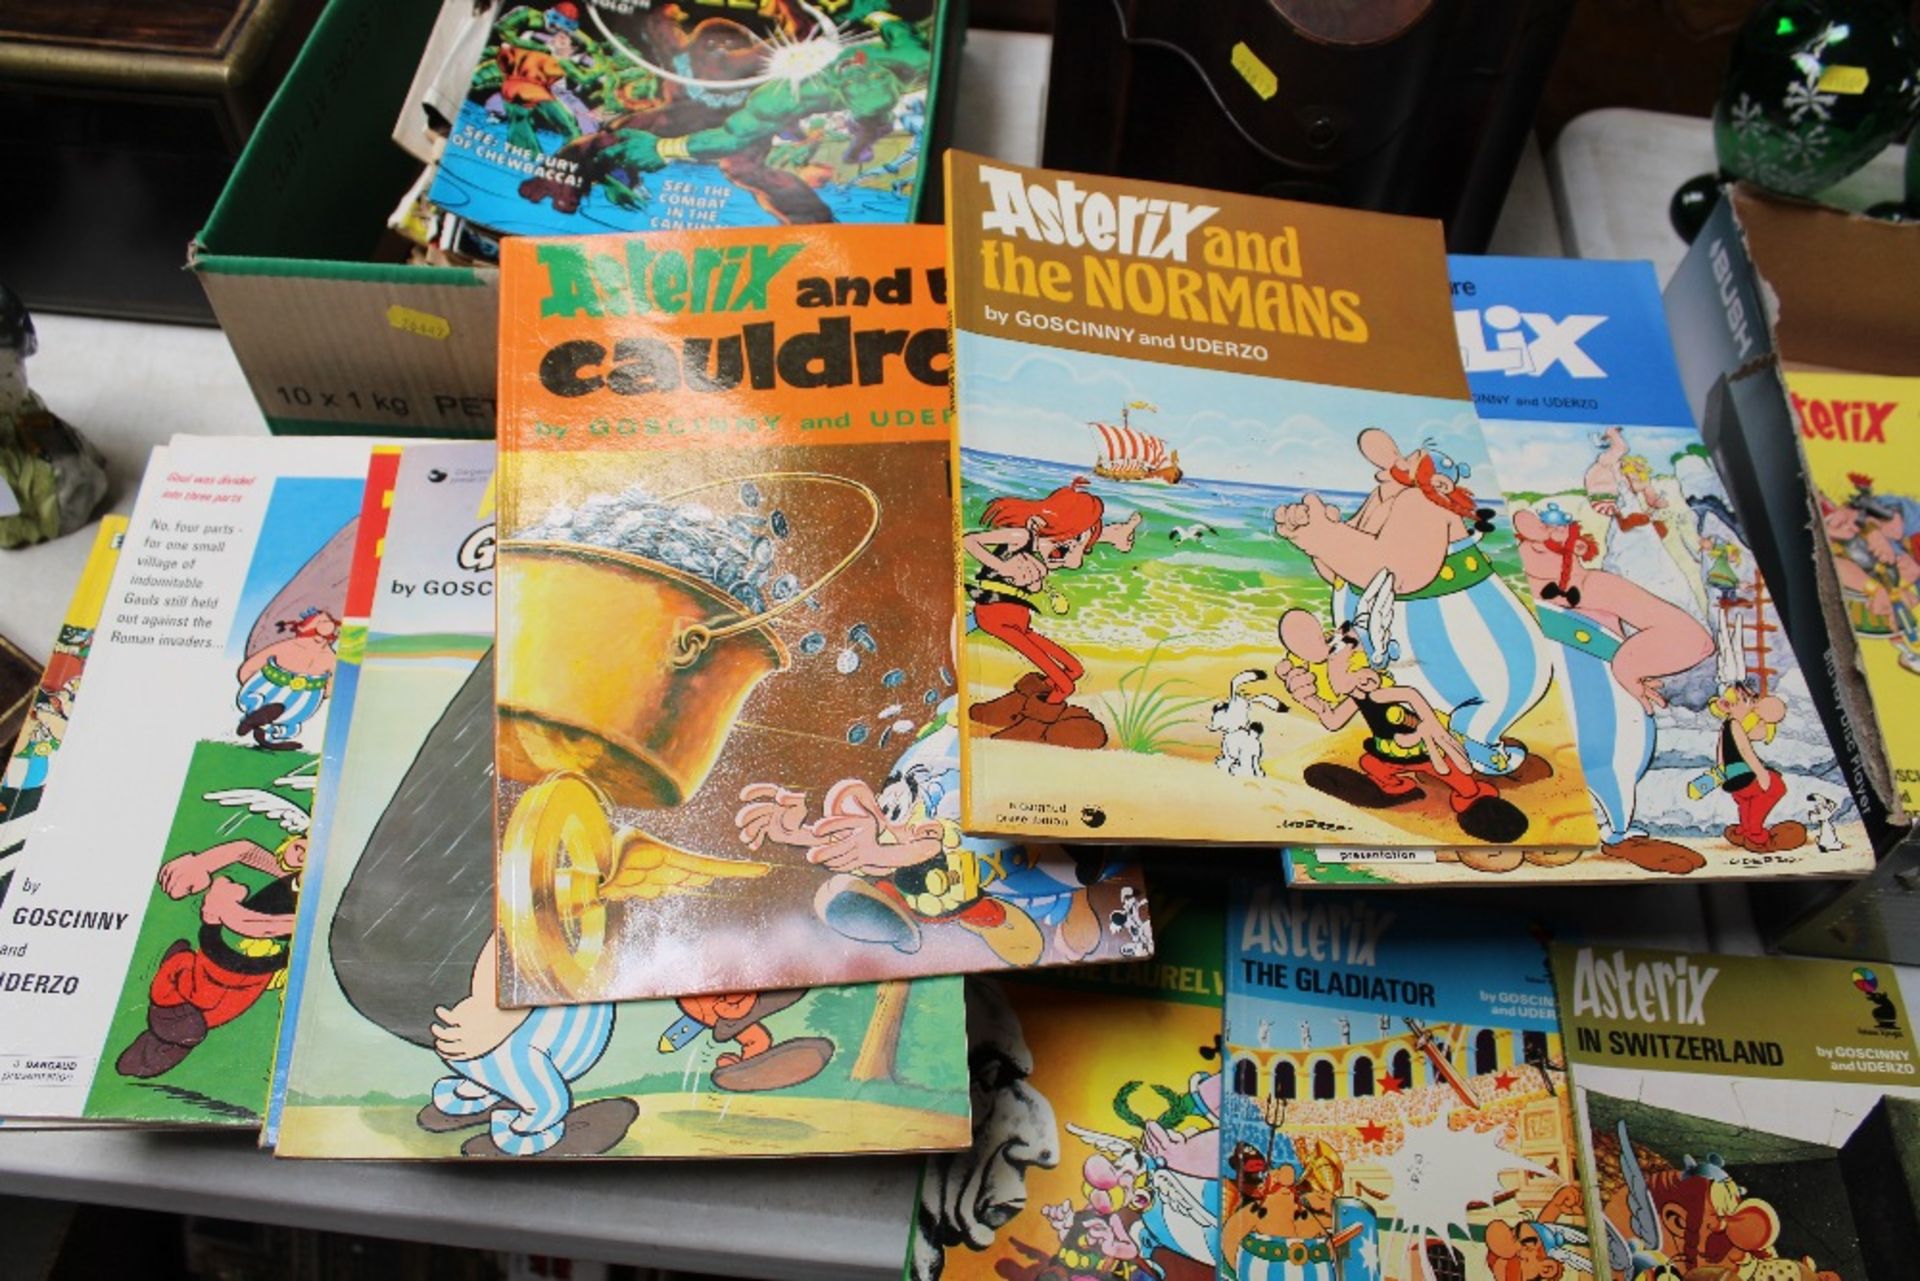 A box of Asterix comic books - Image 5 of 5